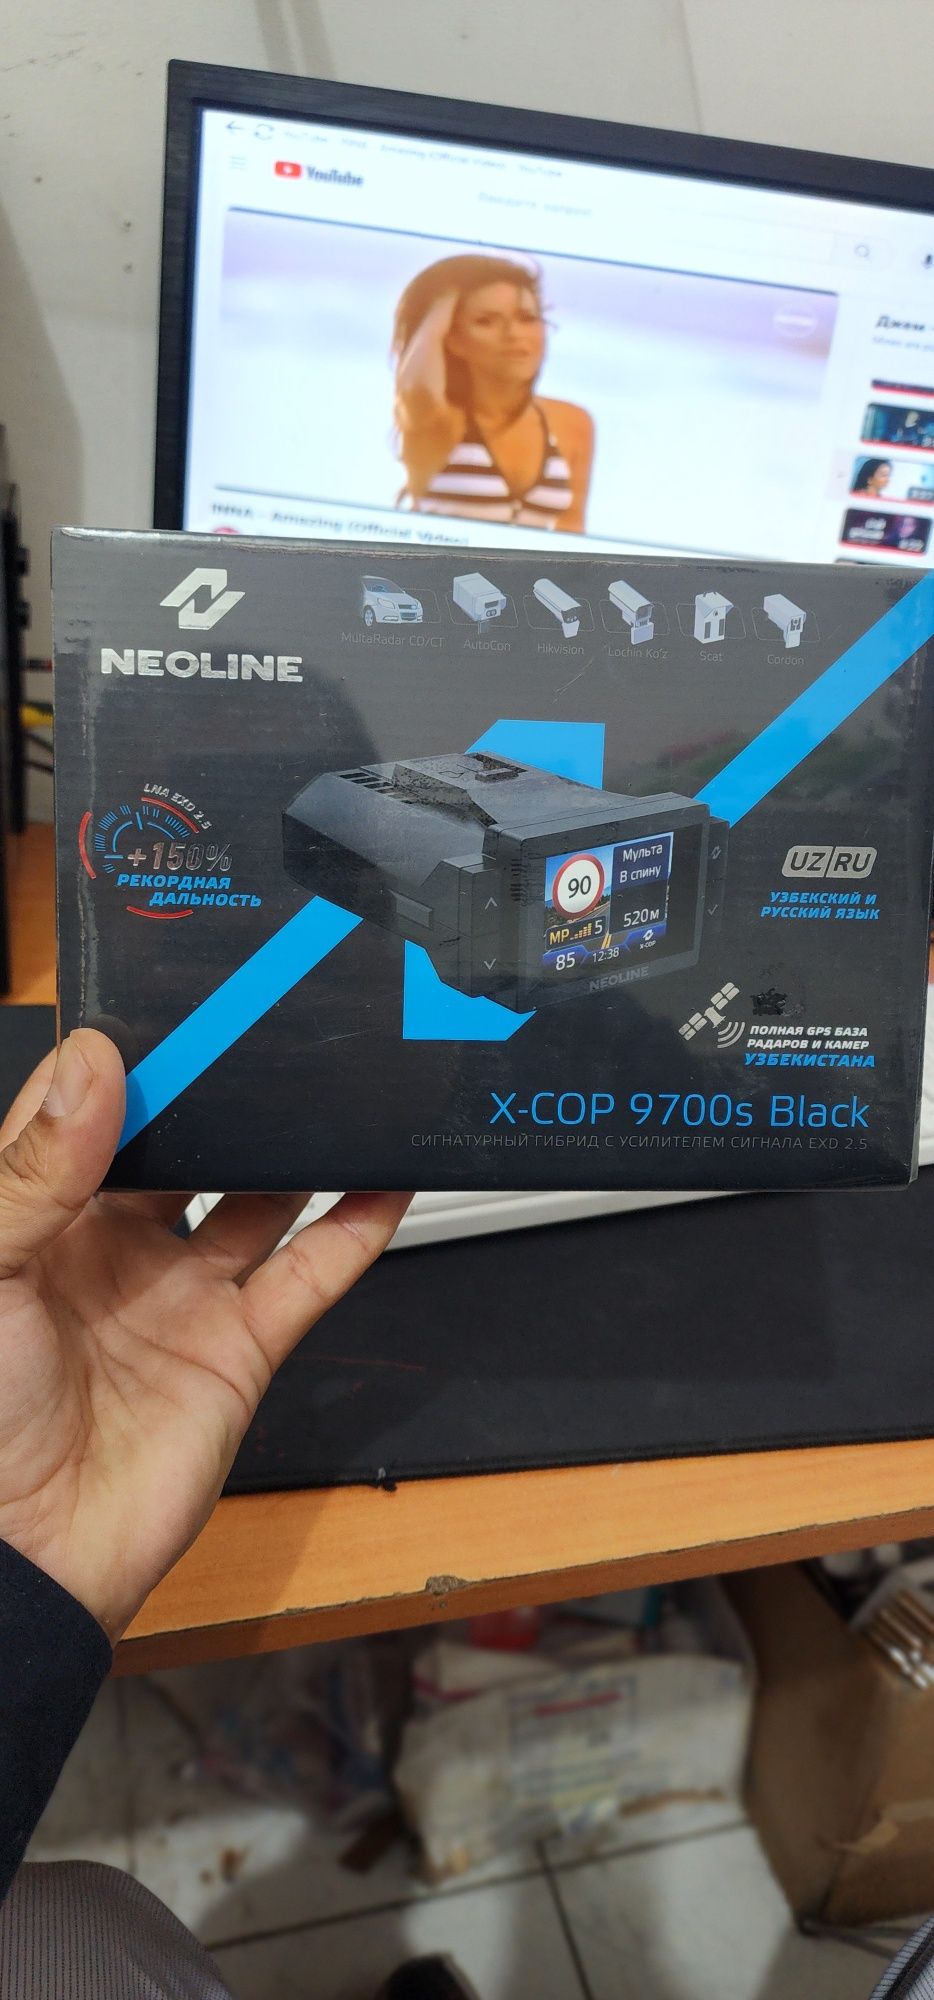 Neoline Xcop 9700s black o'dari radar antradar dostafka web 24/7